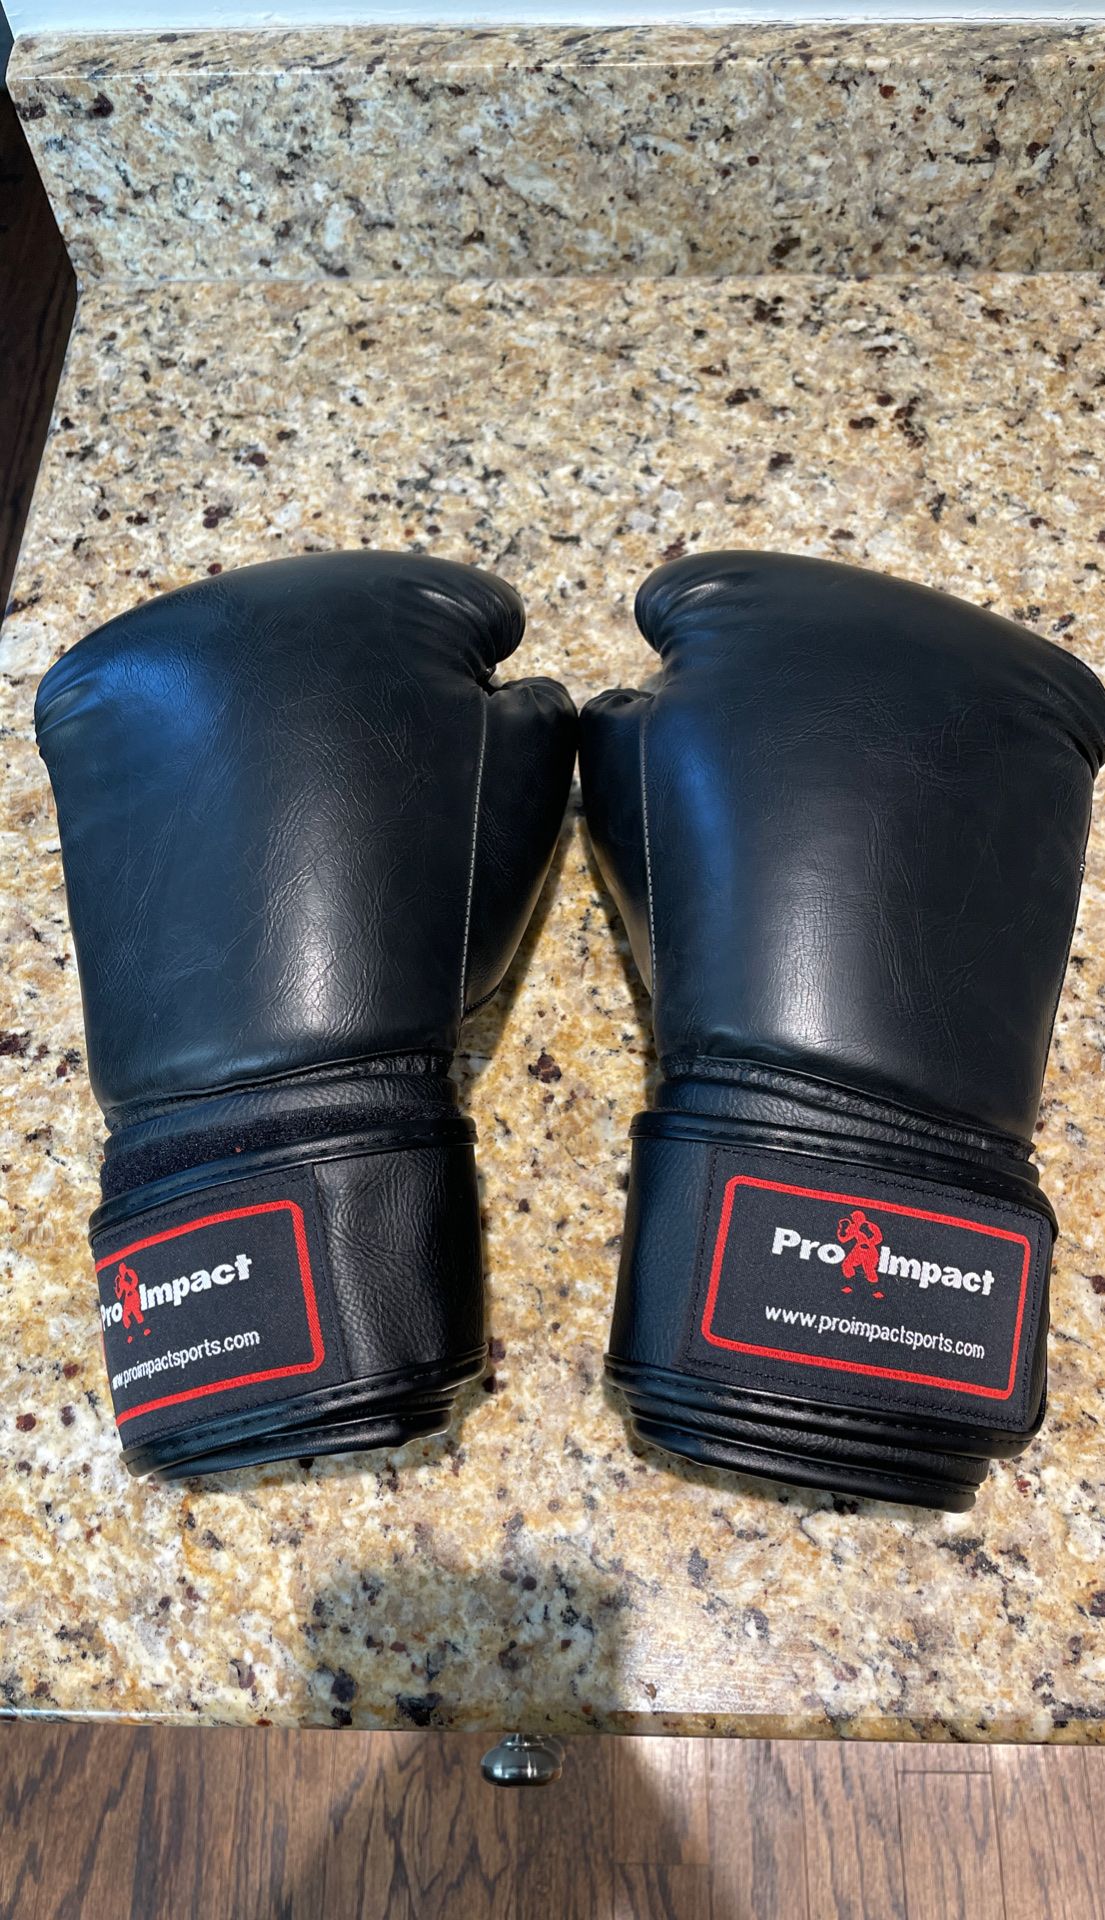 Pro Inpact Boxing Gloves